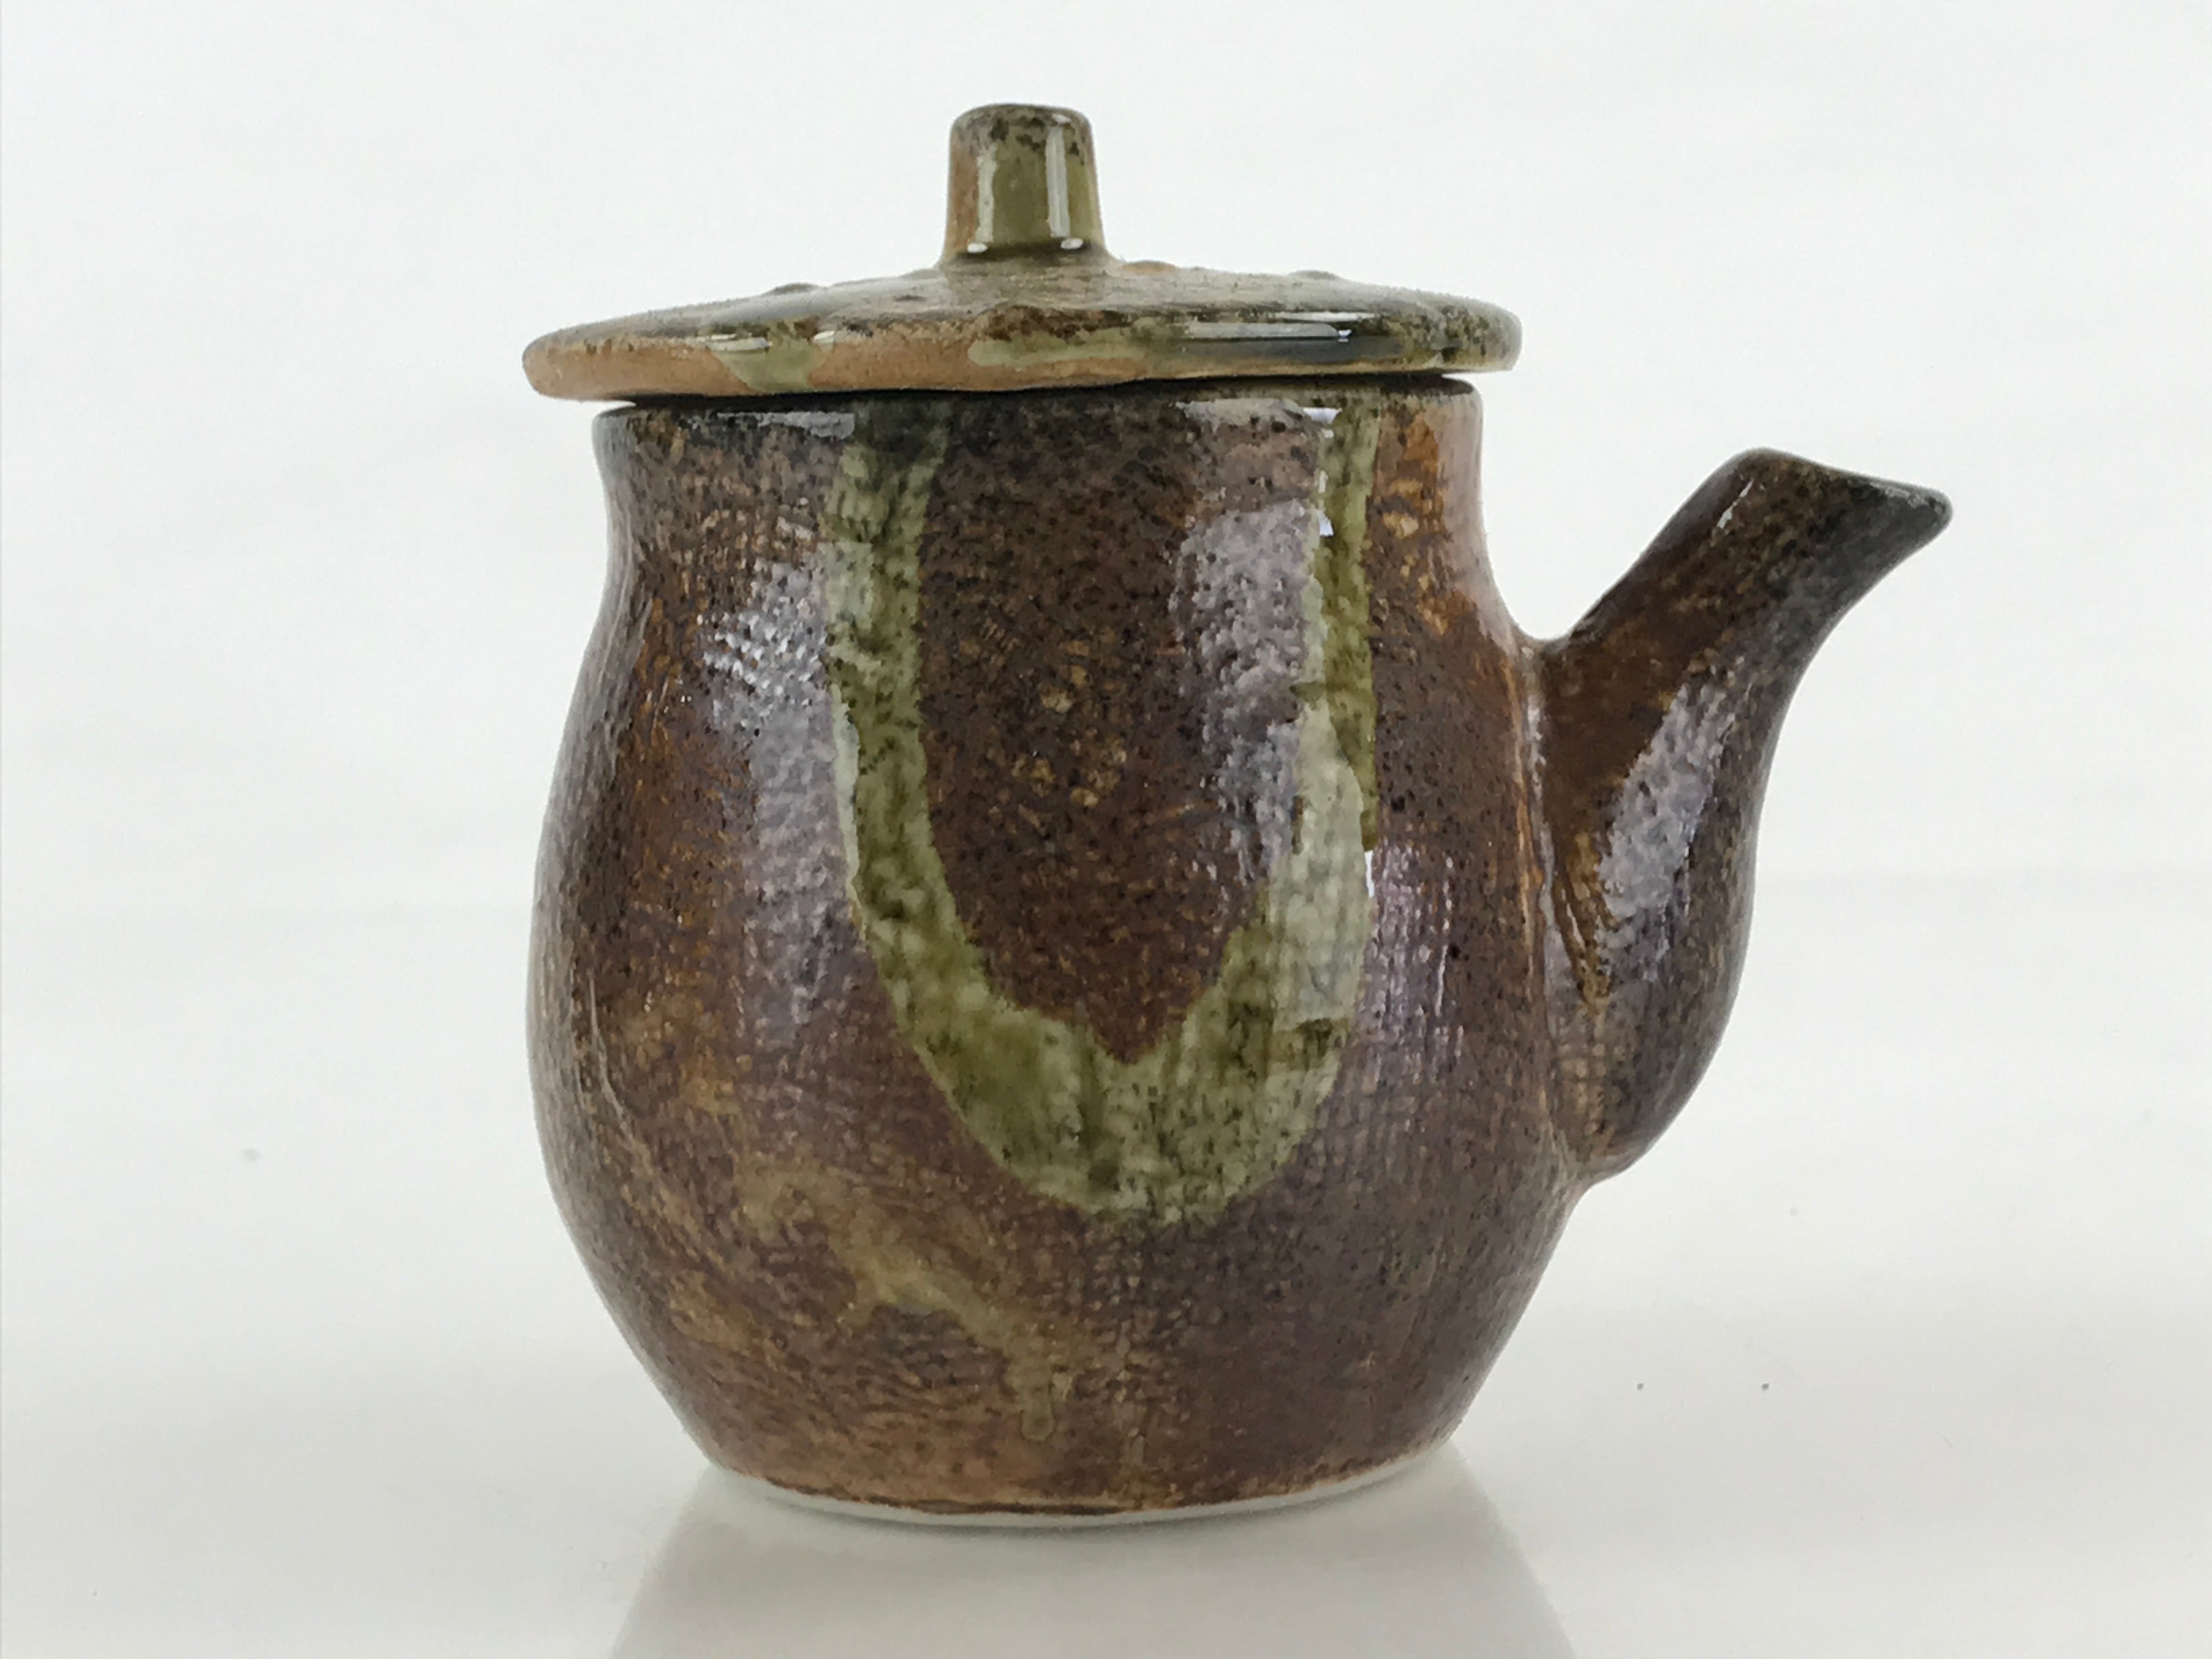 Japanese Ceramic Soy Sauce Dispenser Vtg Small Pot Pottery Yakimono Brown PY448